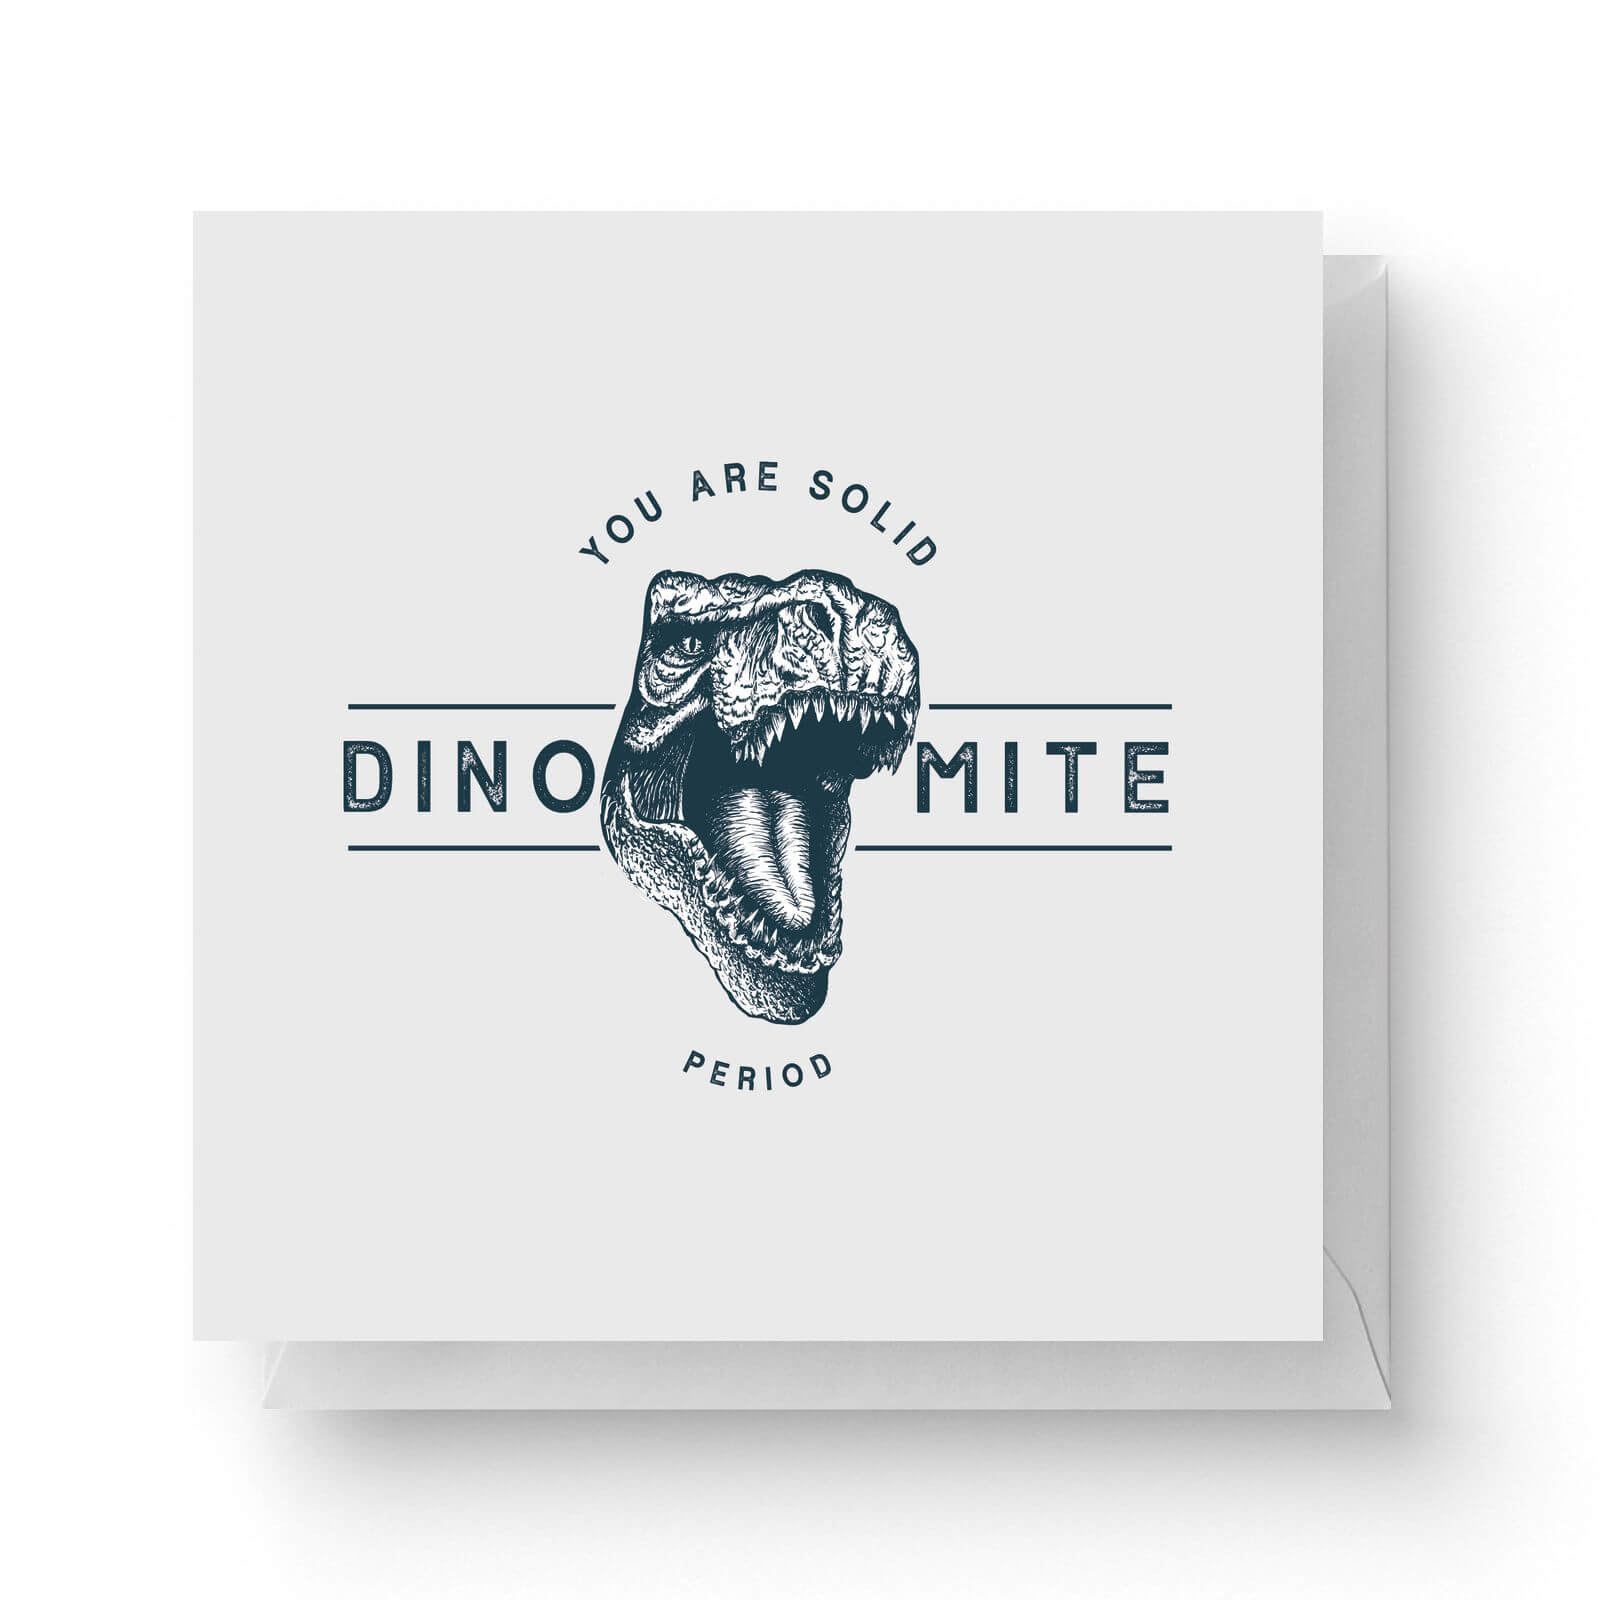 Dinomite Square Greetings Card 148cm X 148cm